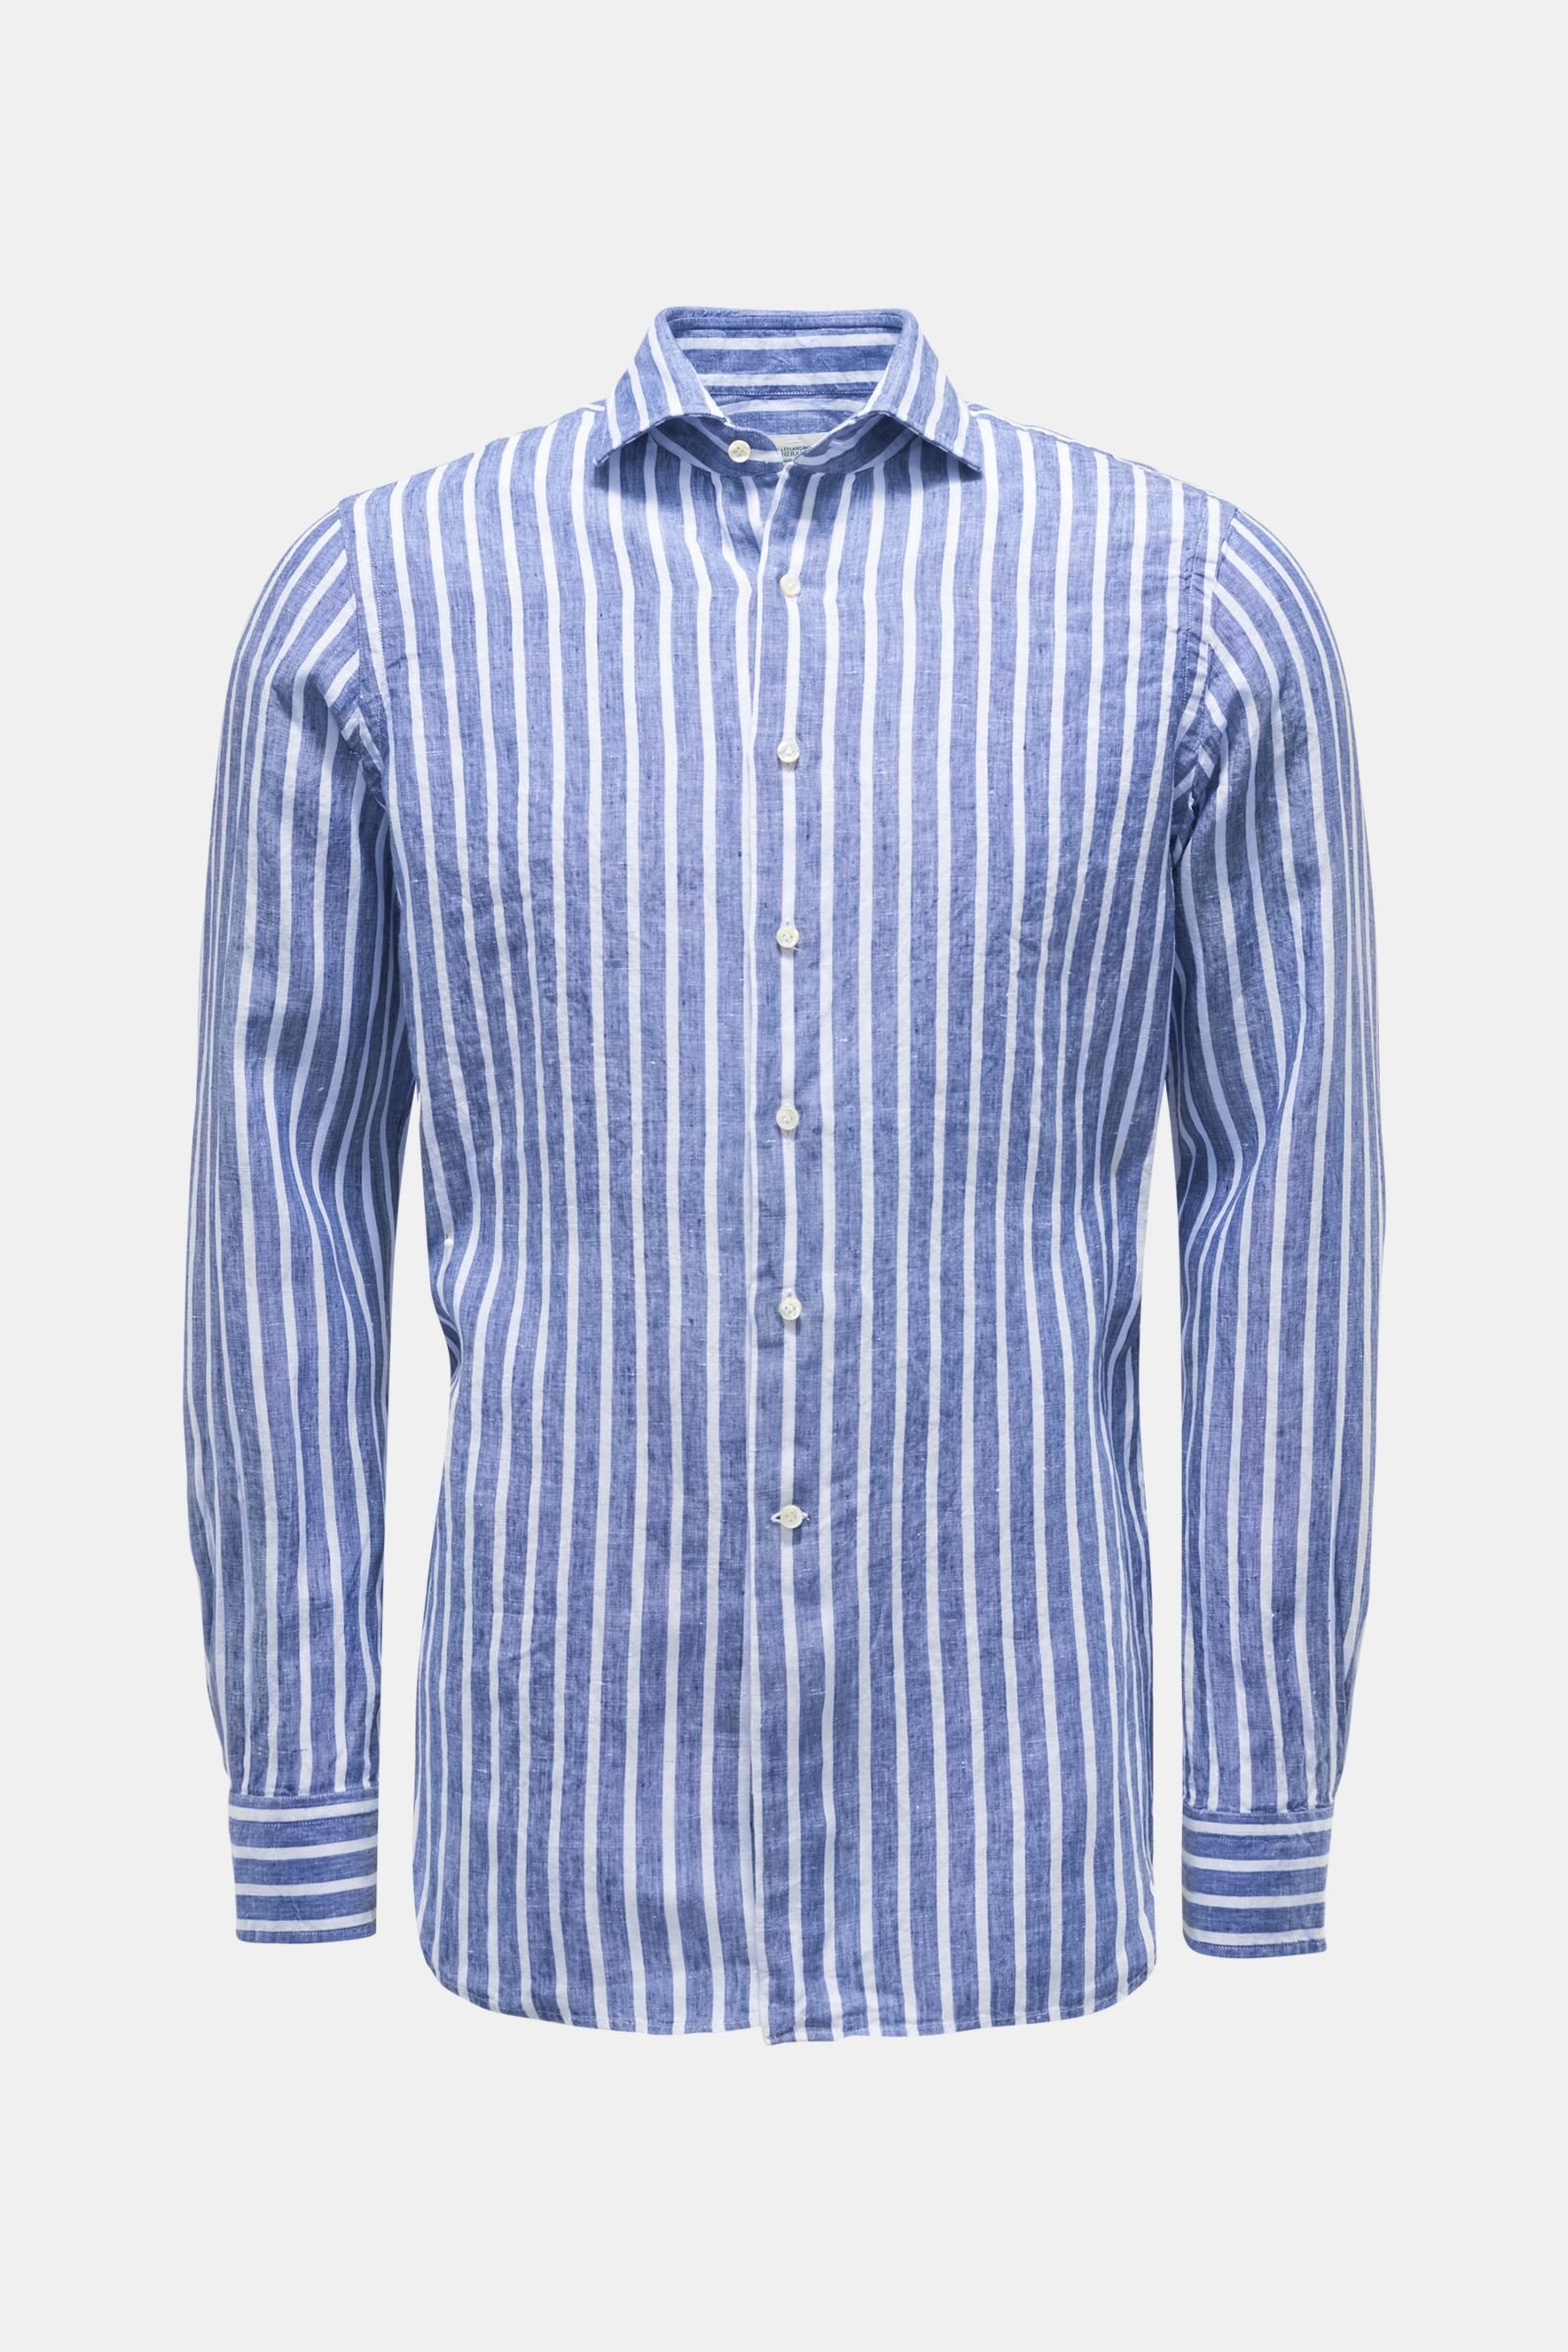 Linen shirt shark collar navy/white striped